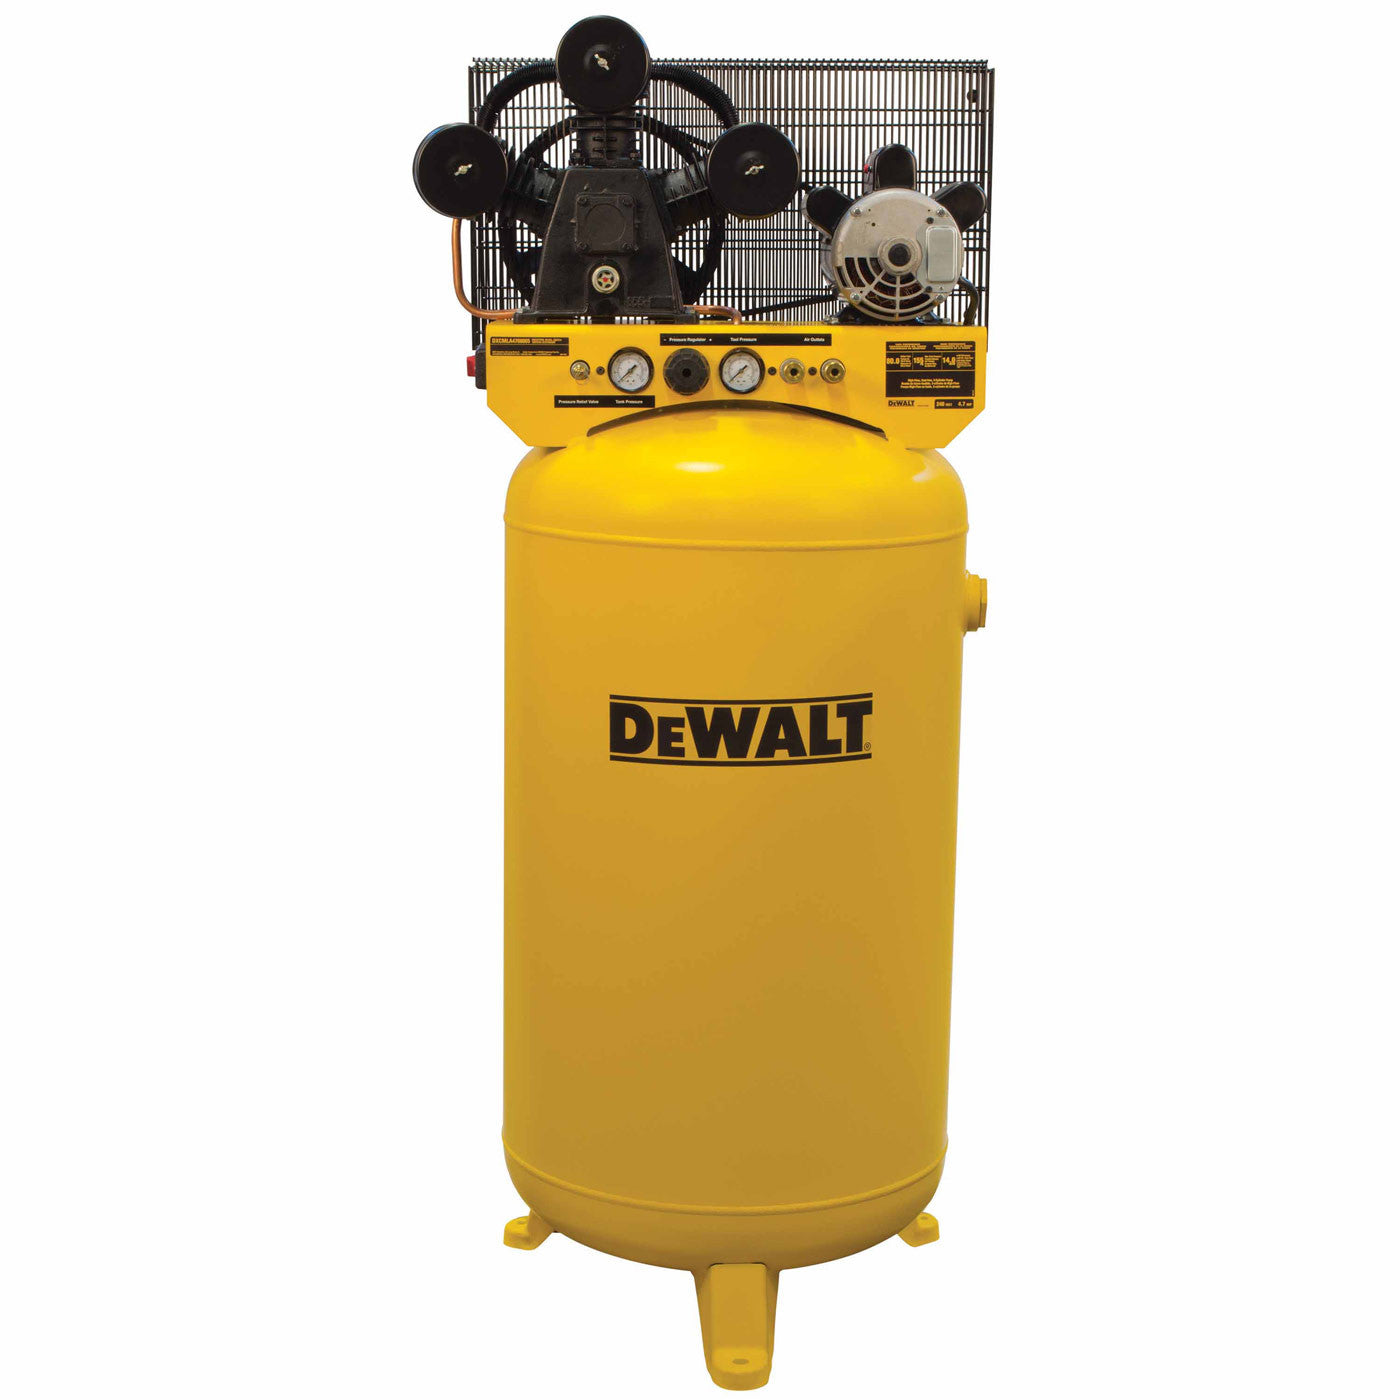 DeWalt DXCMLA4708065 80 Gallon Single Stage Stationary Air Compressor